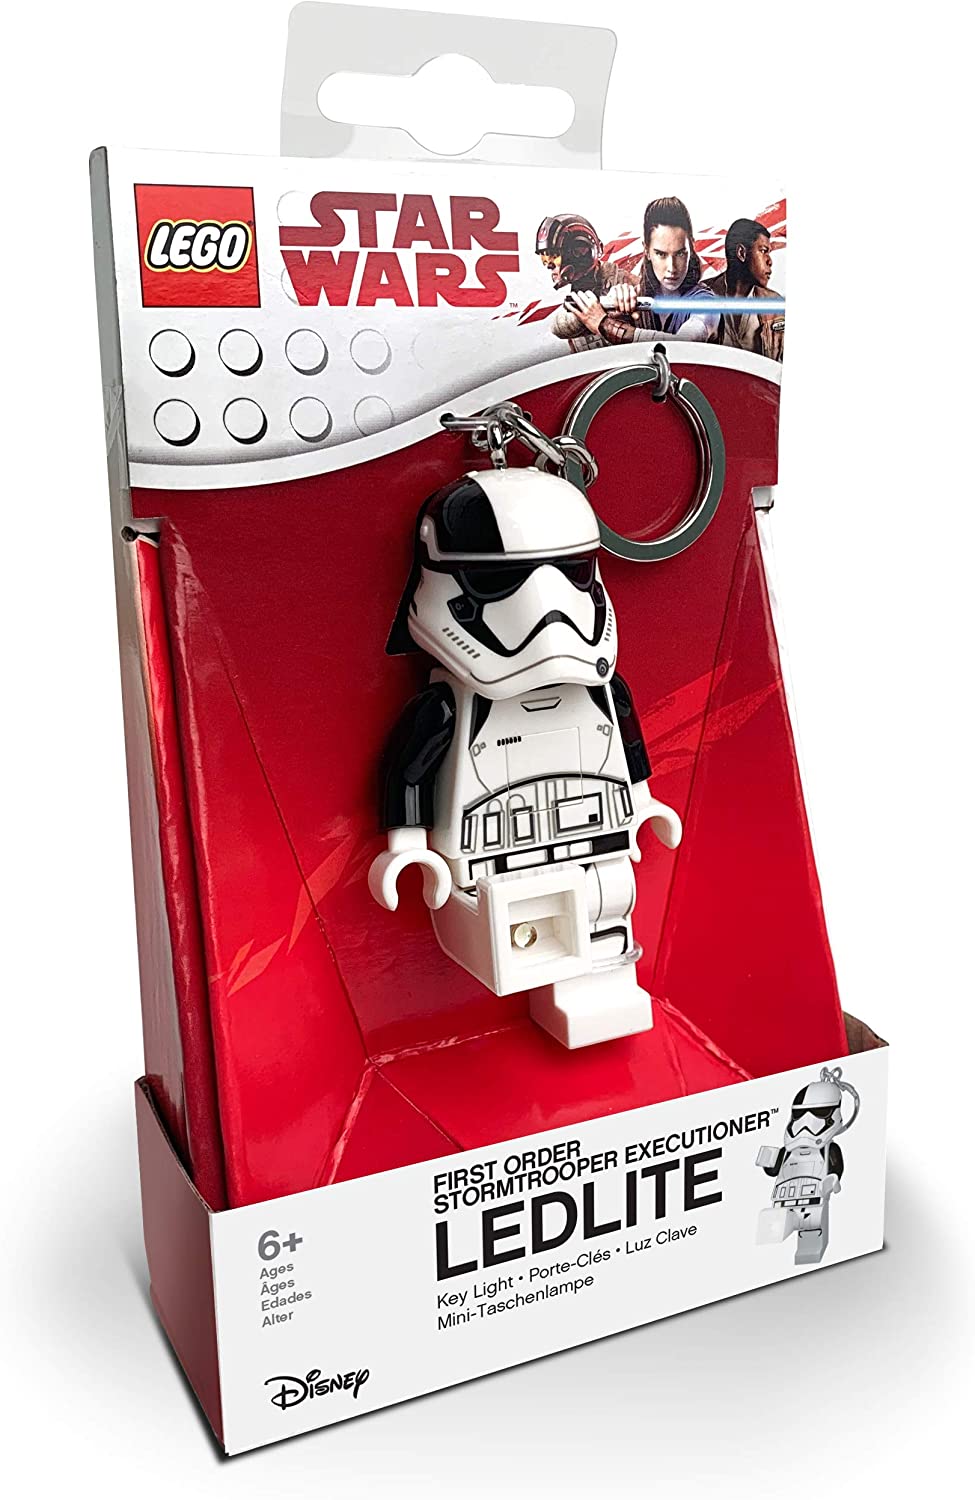 Star Wars Lego LED First Order Executioner keychain